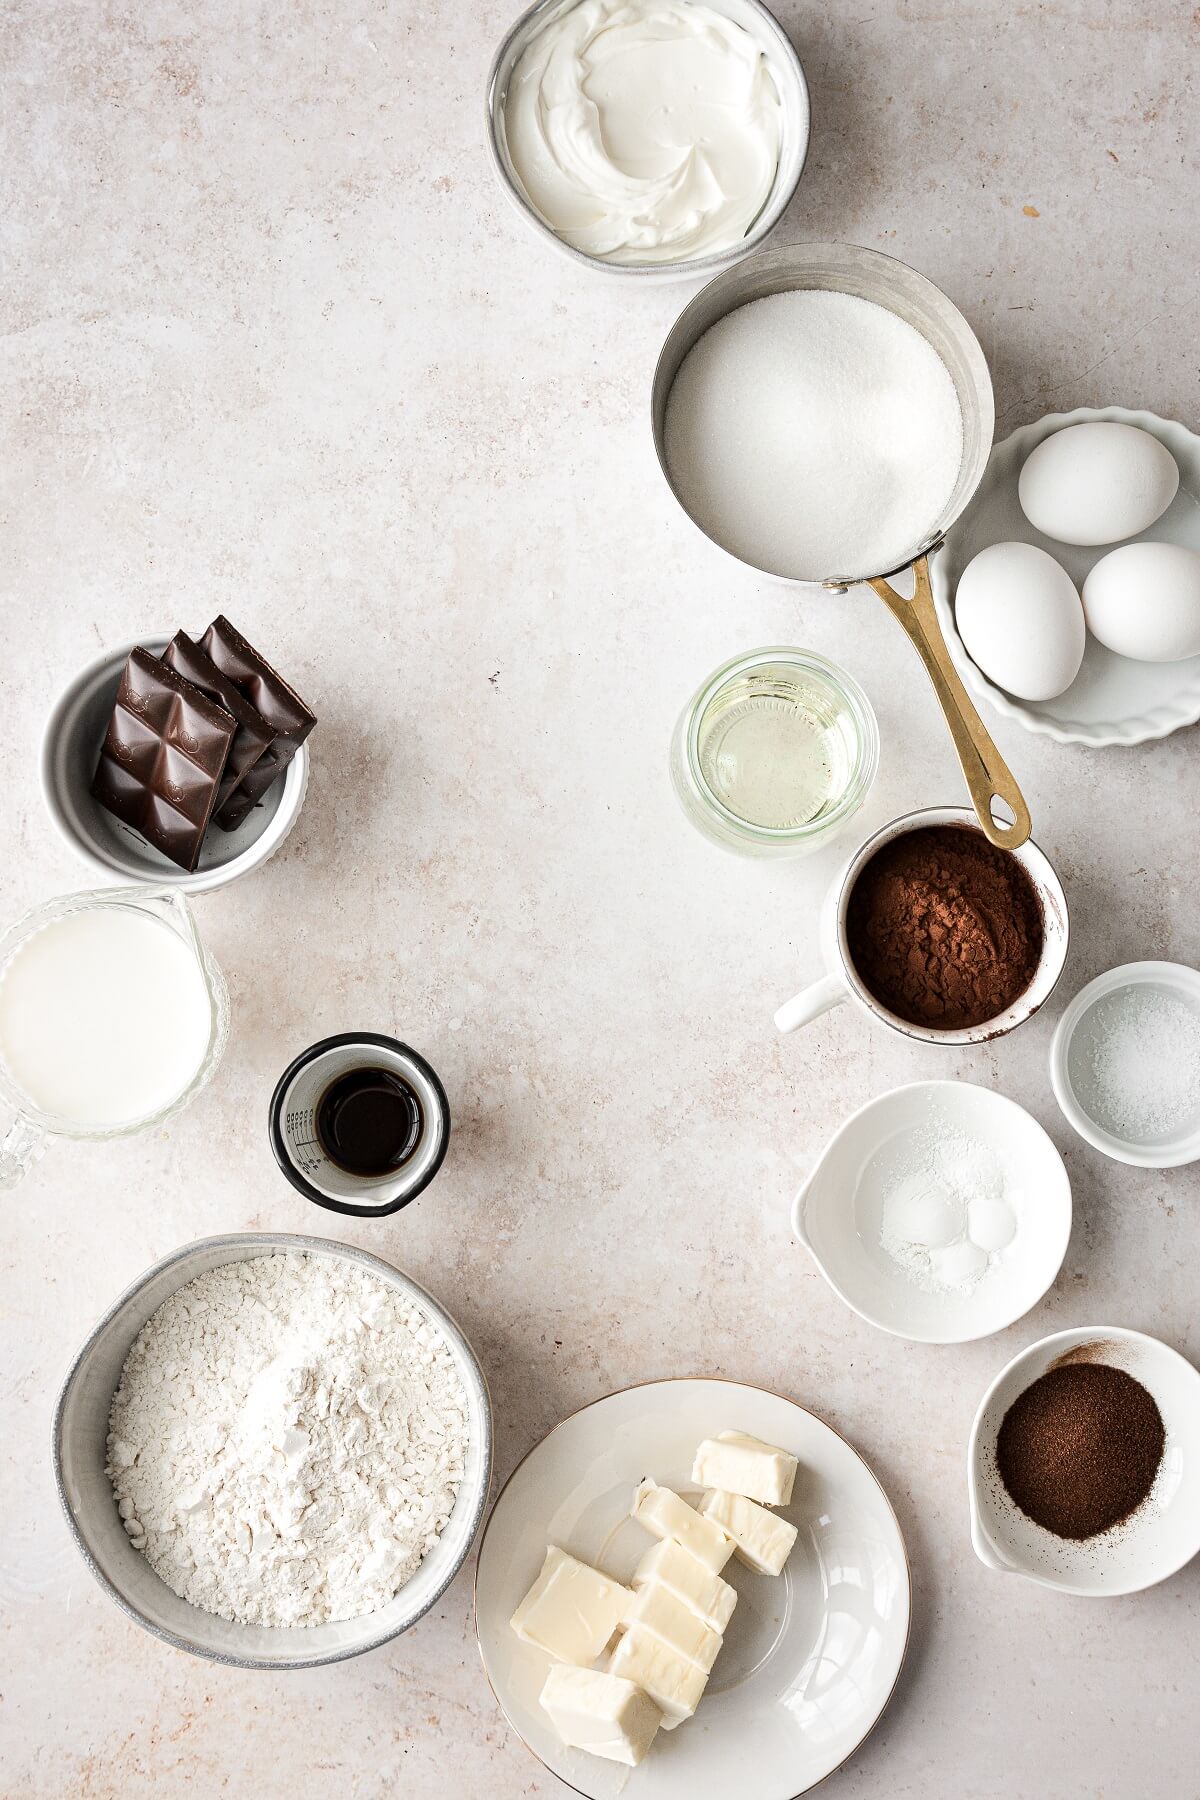 Ingredients for making chocolate bundt cake.